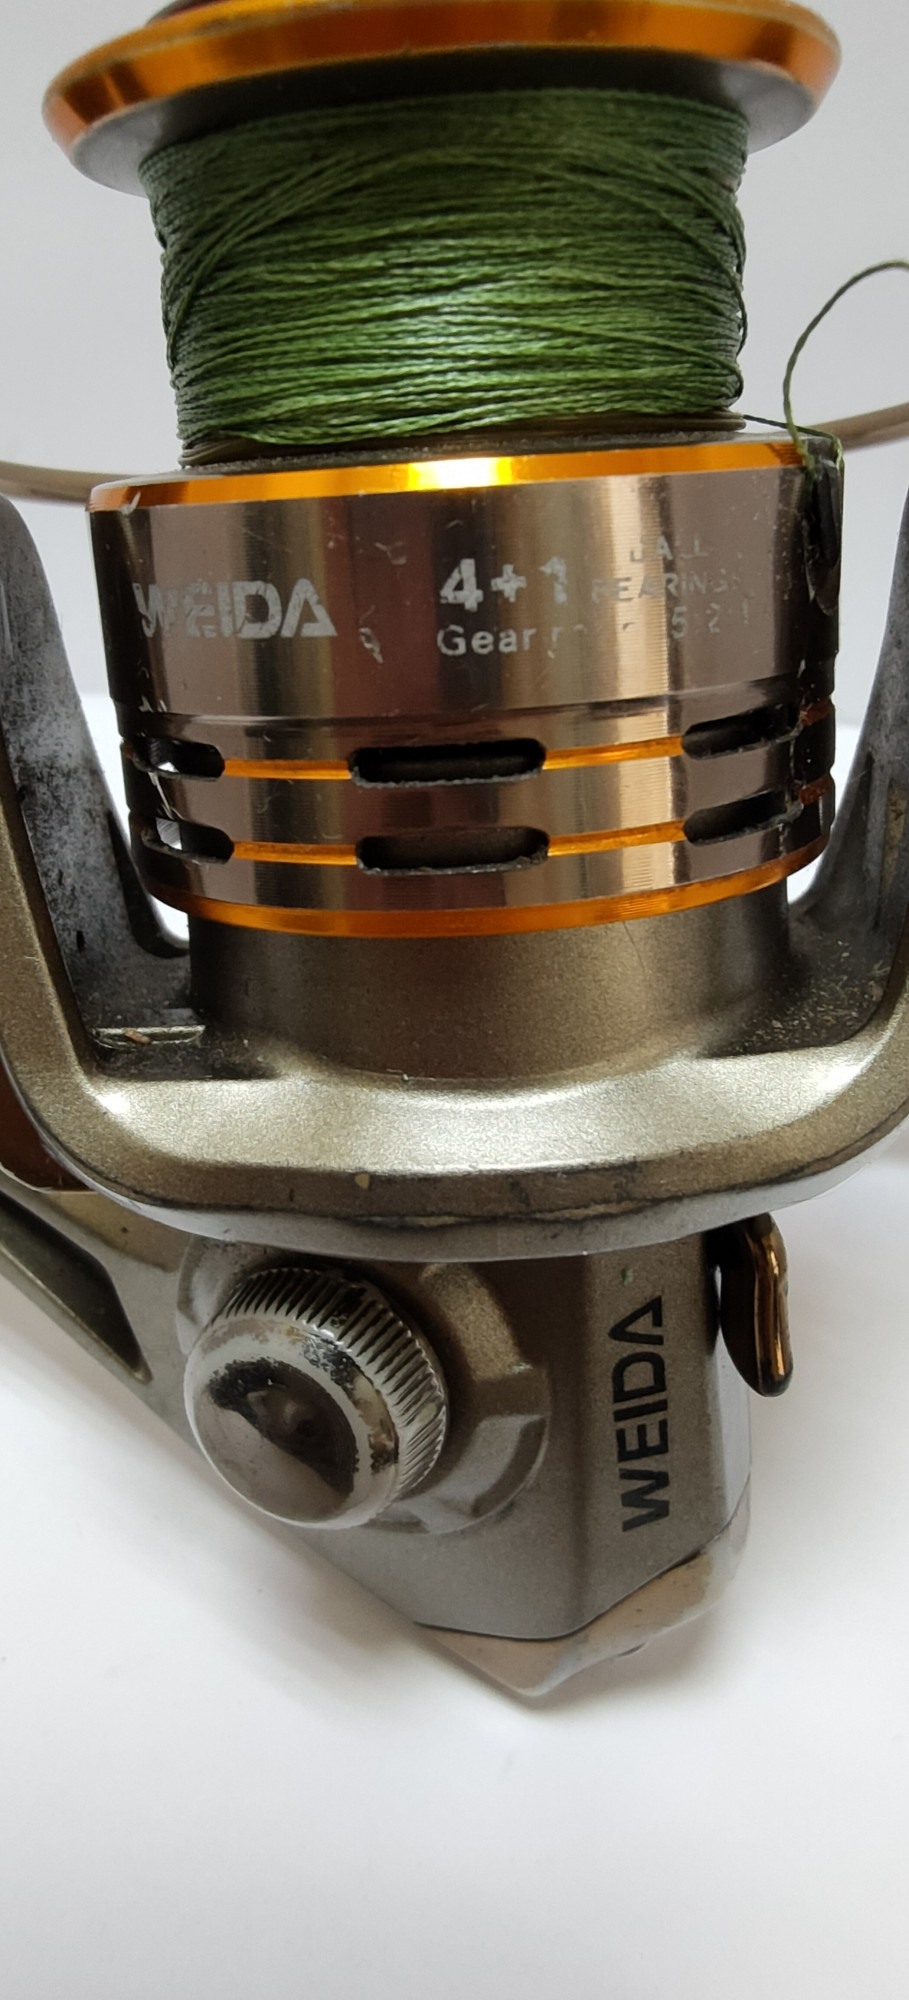 Спиннинговая катушка Weida WD.GTF 3000 (G002), 4+1 2